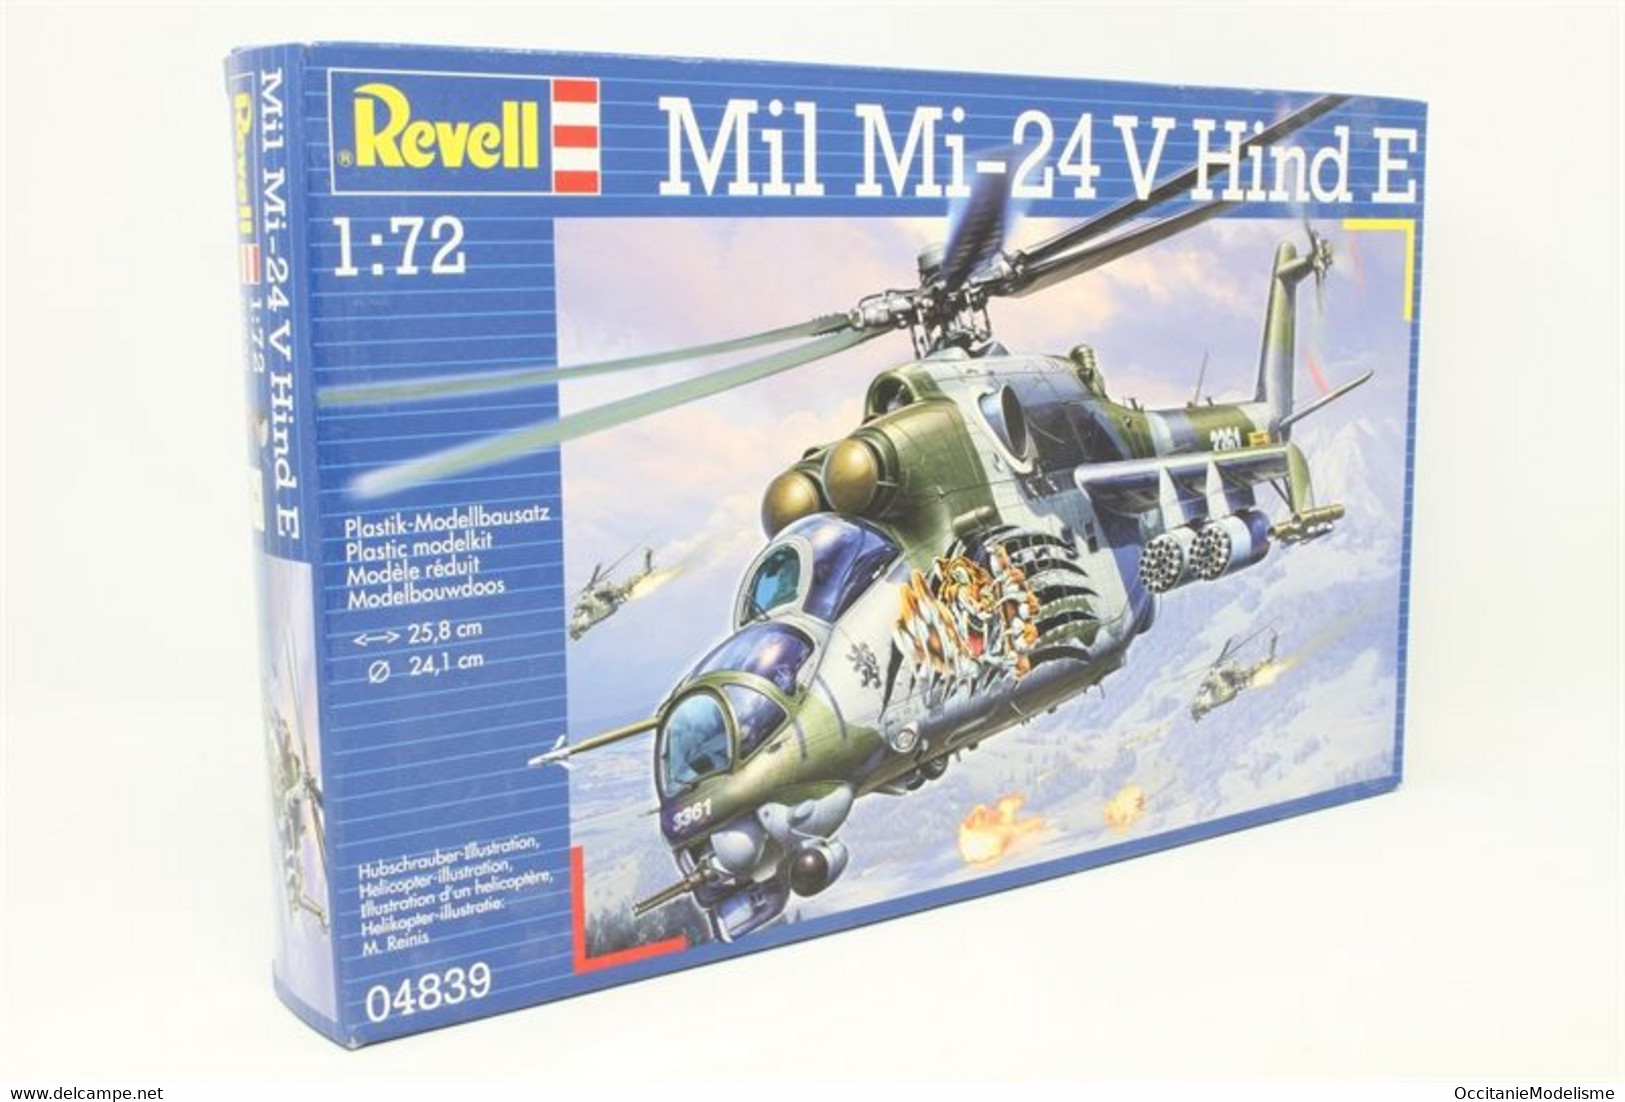 Revell - MIL Mi-24 V Hind E Maquette Hélicoptère Kit Plastique Réf. 04839 Neuf NBO 1/72 - Hélicoptères